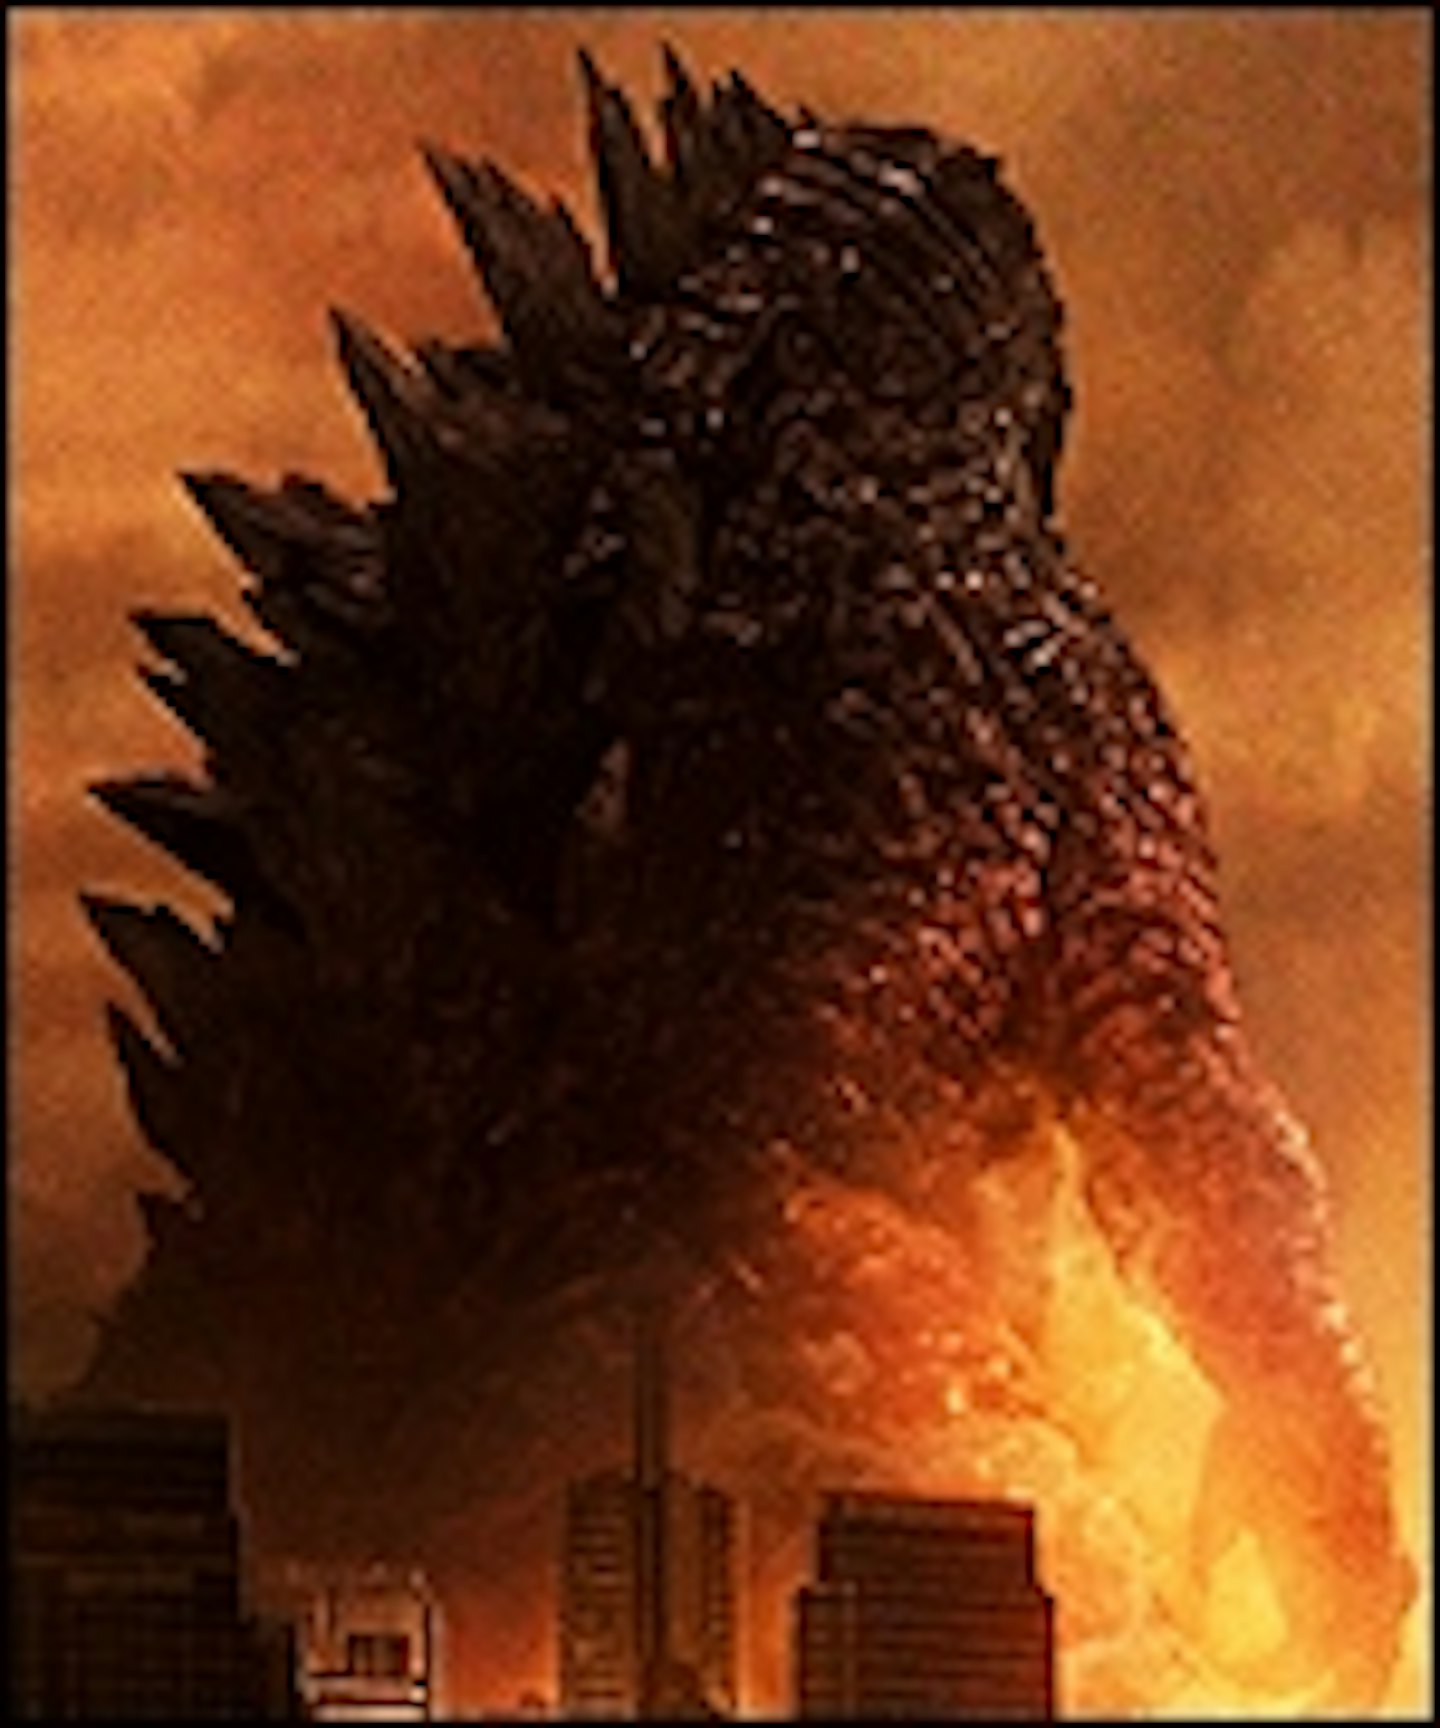 The New Godzilla Trailer Has Stomped Online